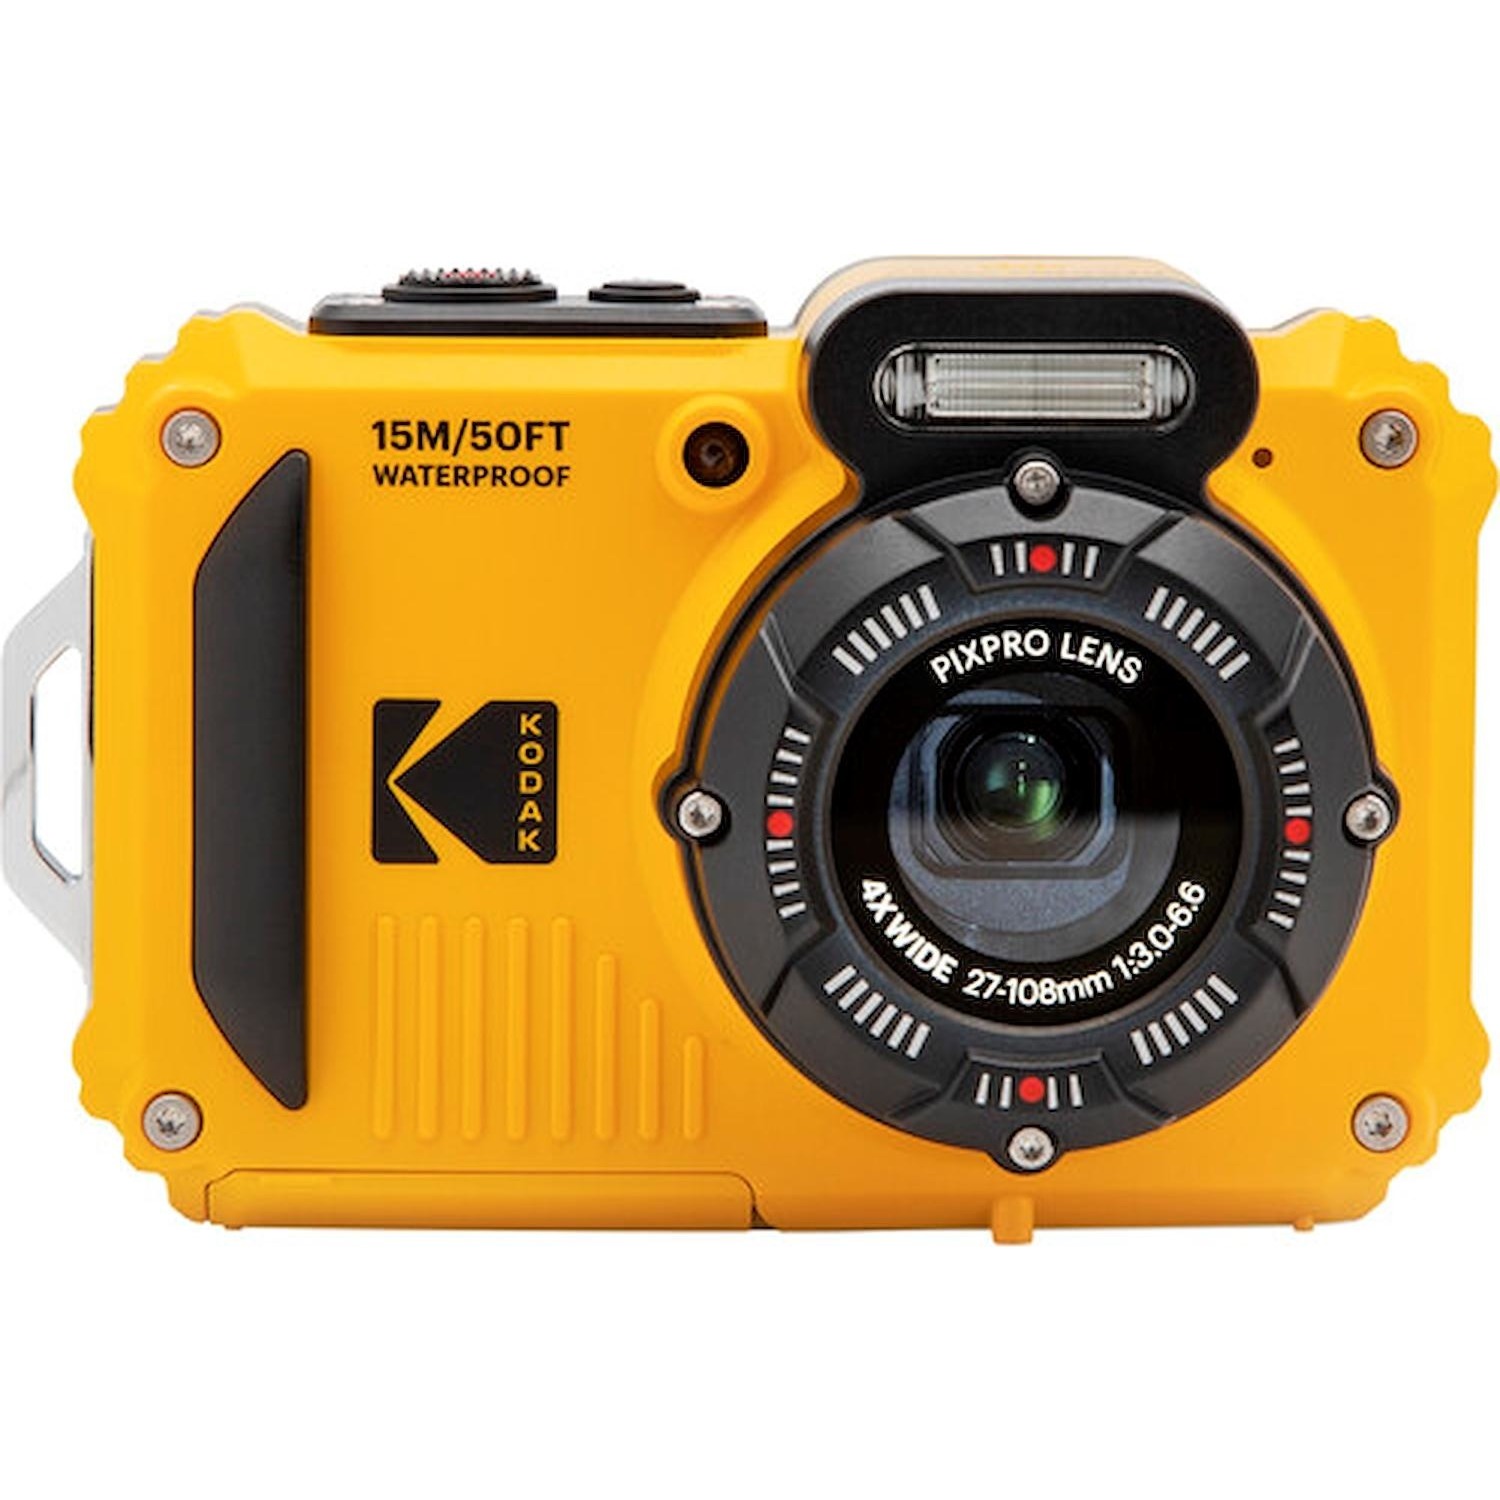 Fotocamera subacquea Kodak KFWPZ2 colore giallo - DIMOStore